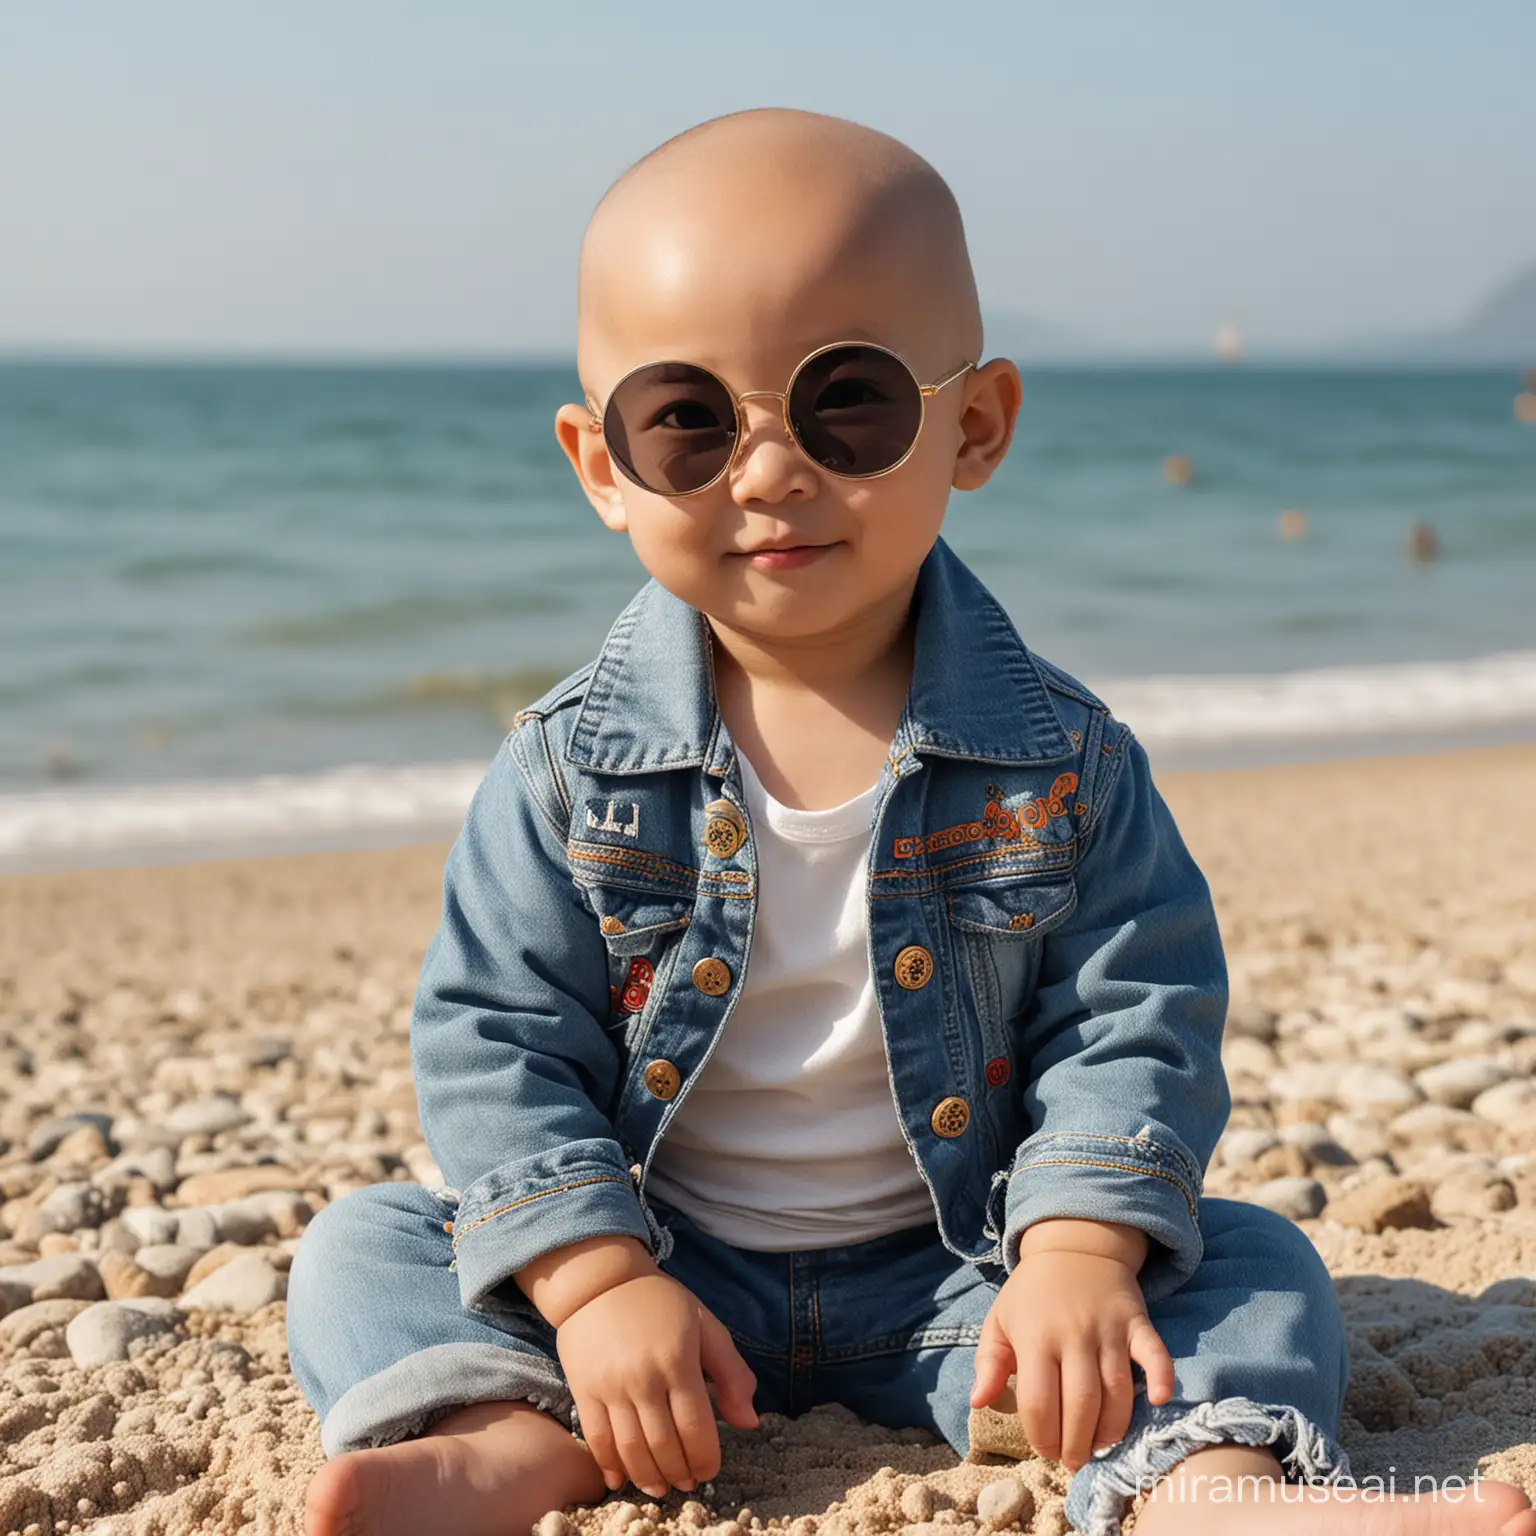 Adorable Asian Toddler in Stylish Sunglasses Enjoying Beach Morning